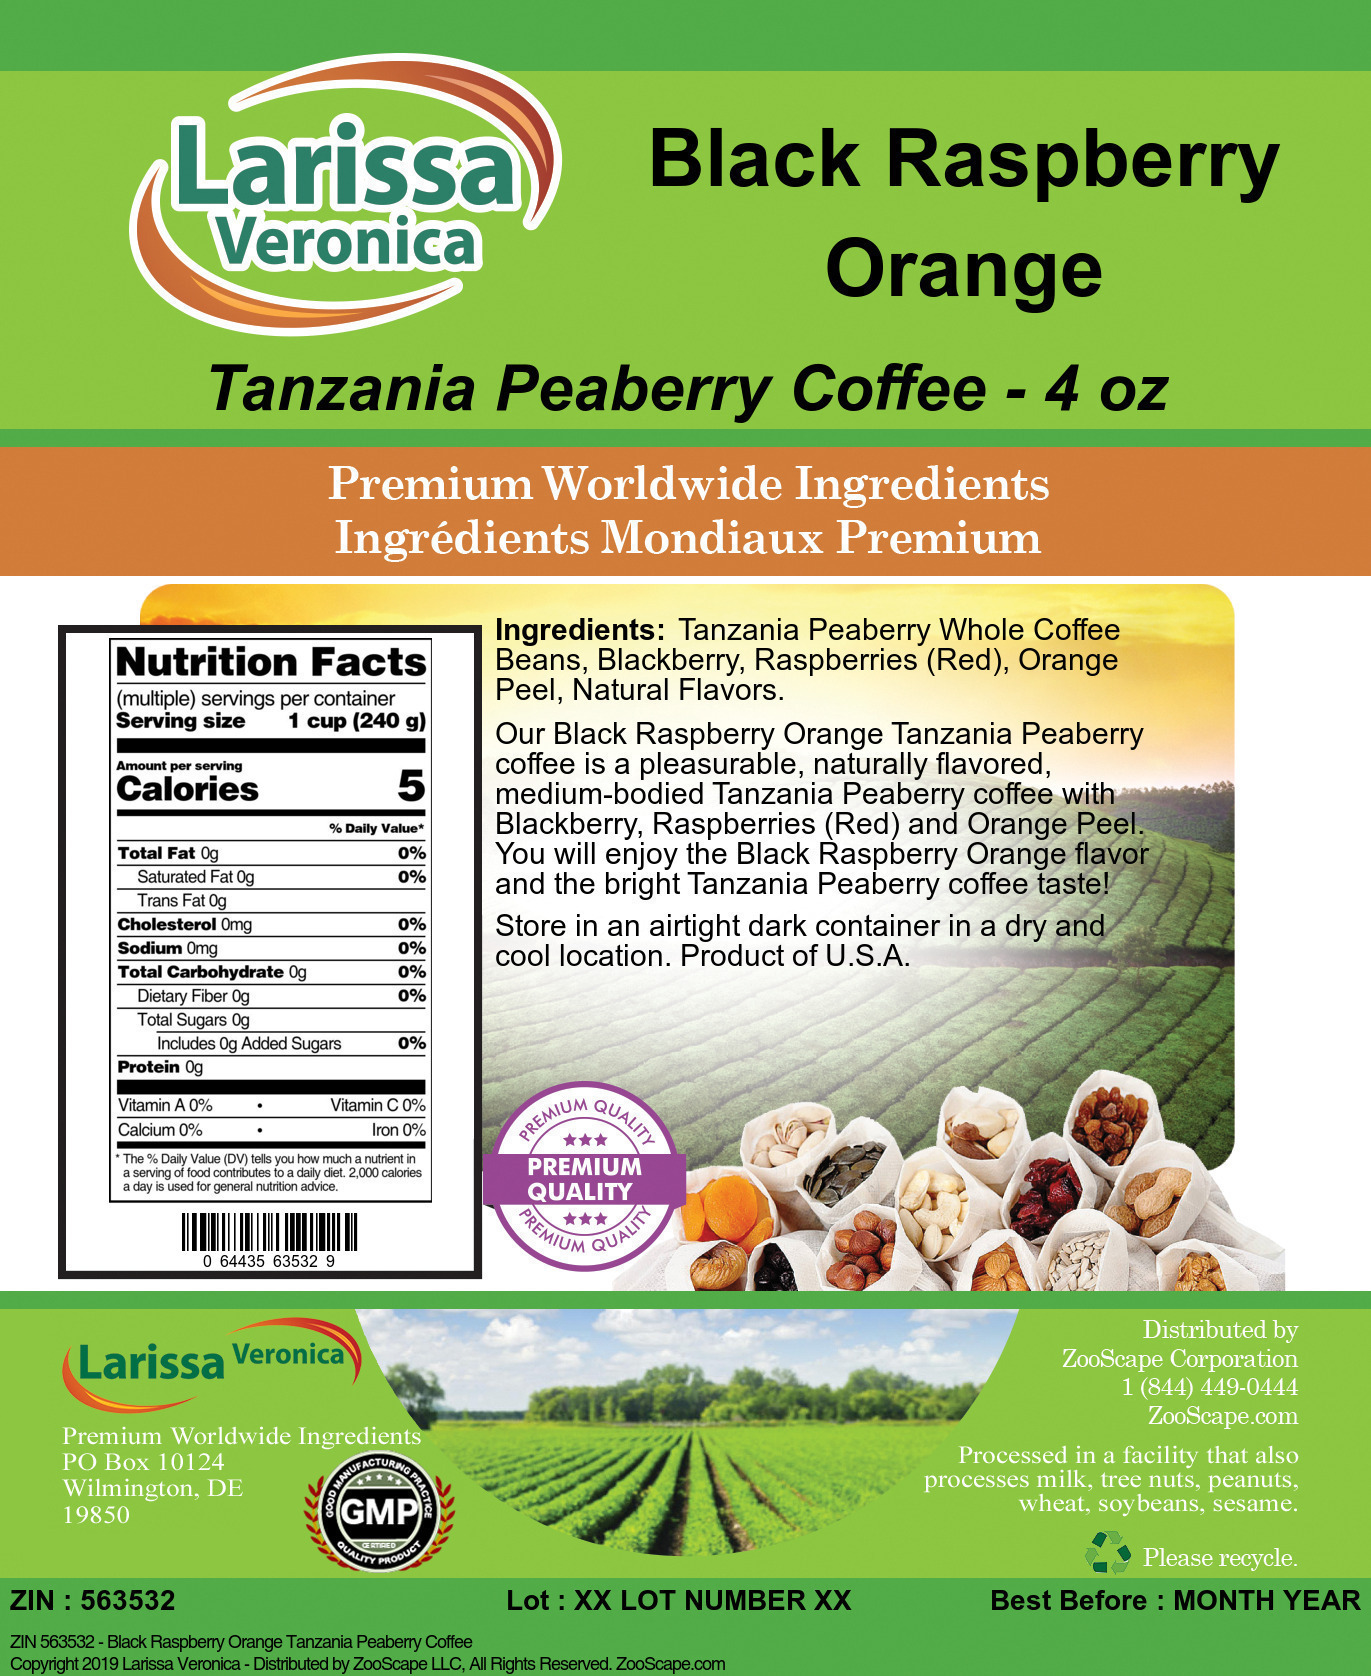 Black Raspberry Orange Tanzania Peaberry Coffee - Label